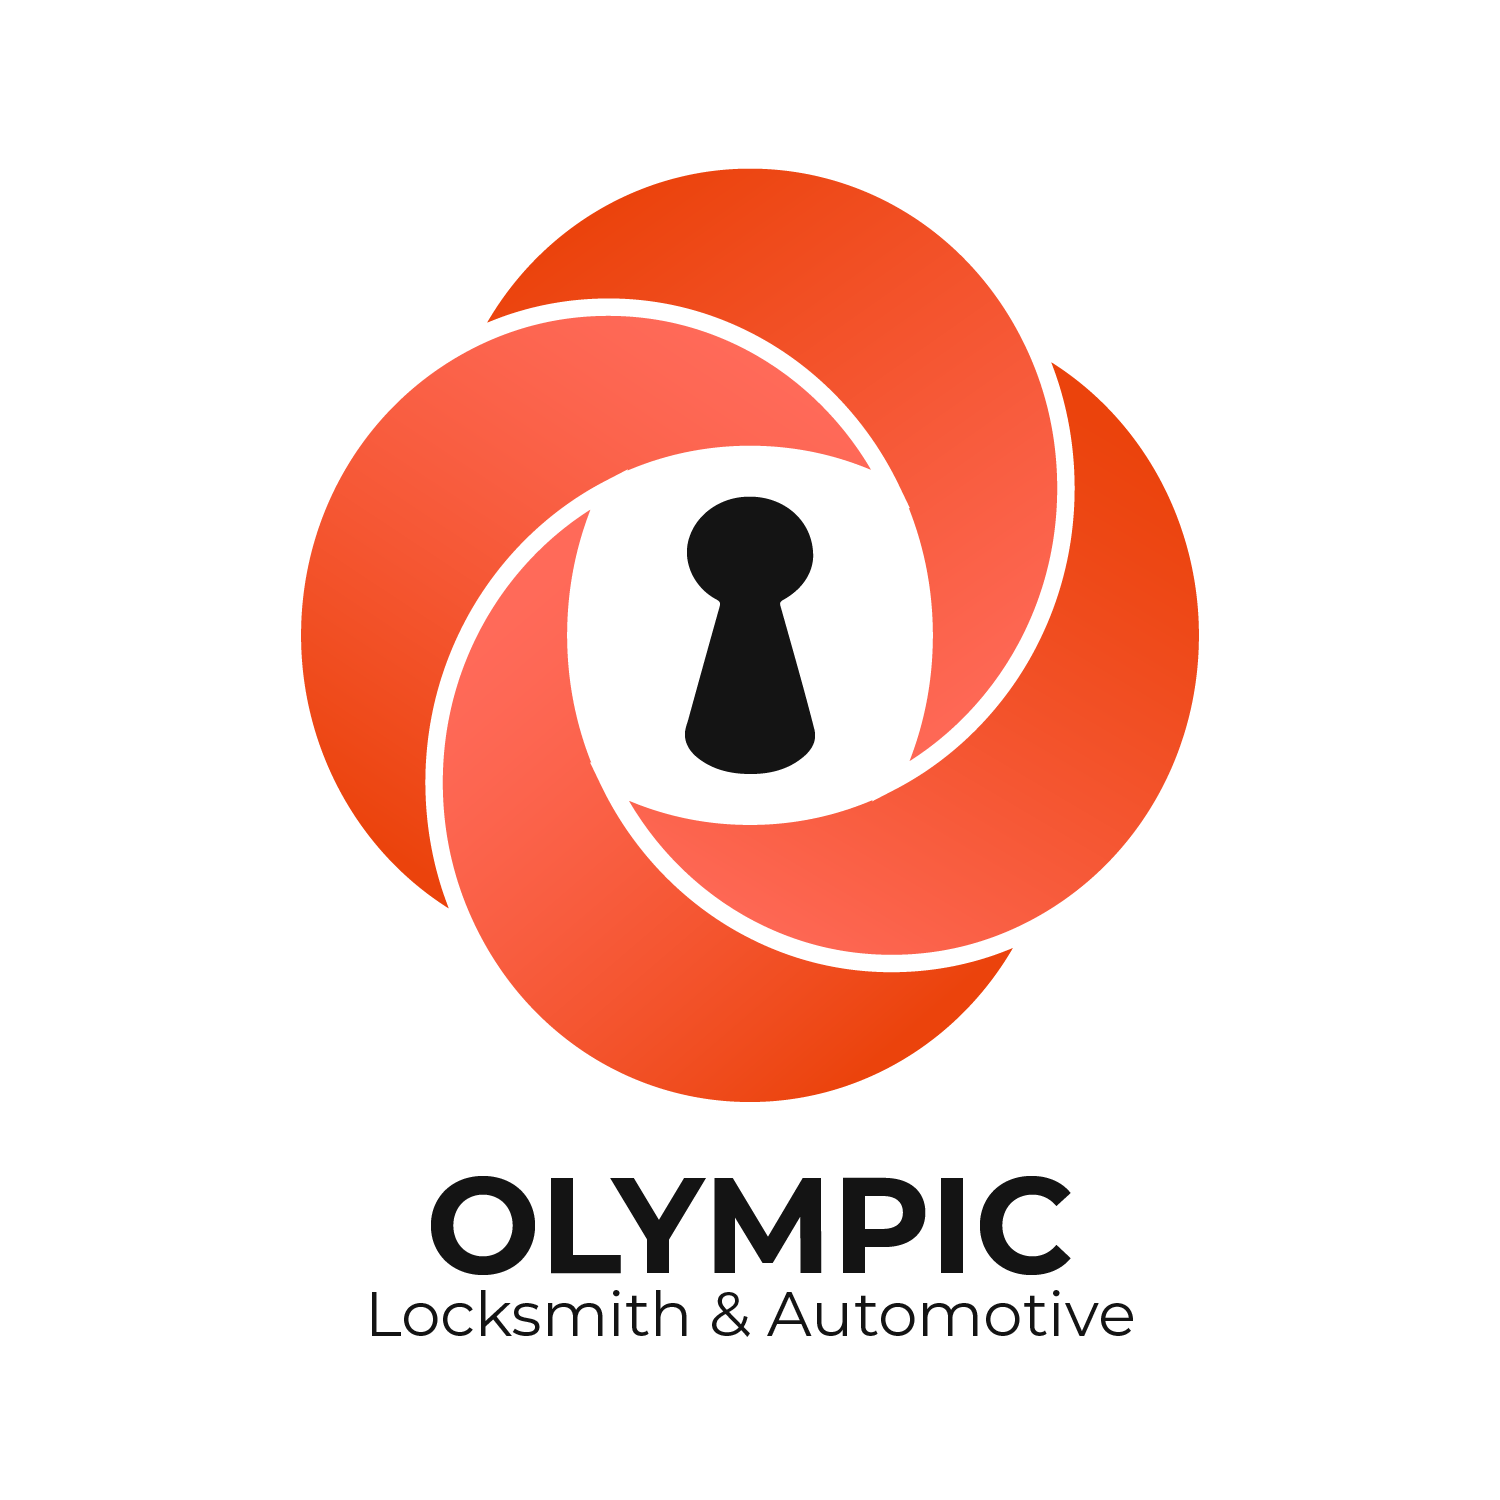 Olympic Locksmith & Automotive